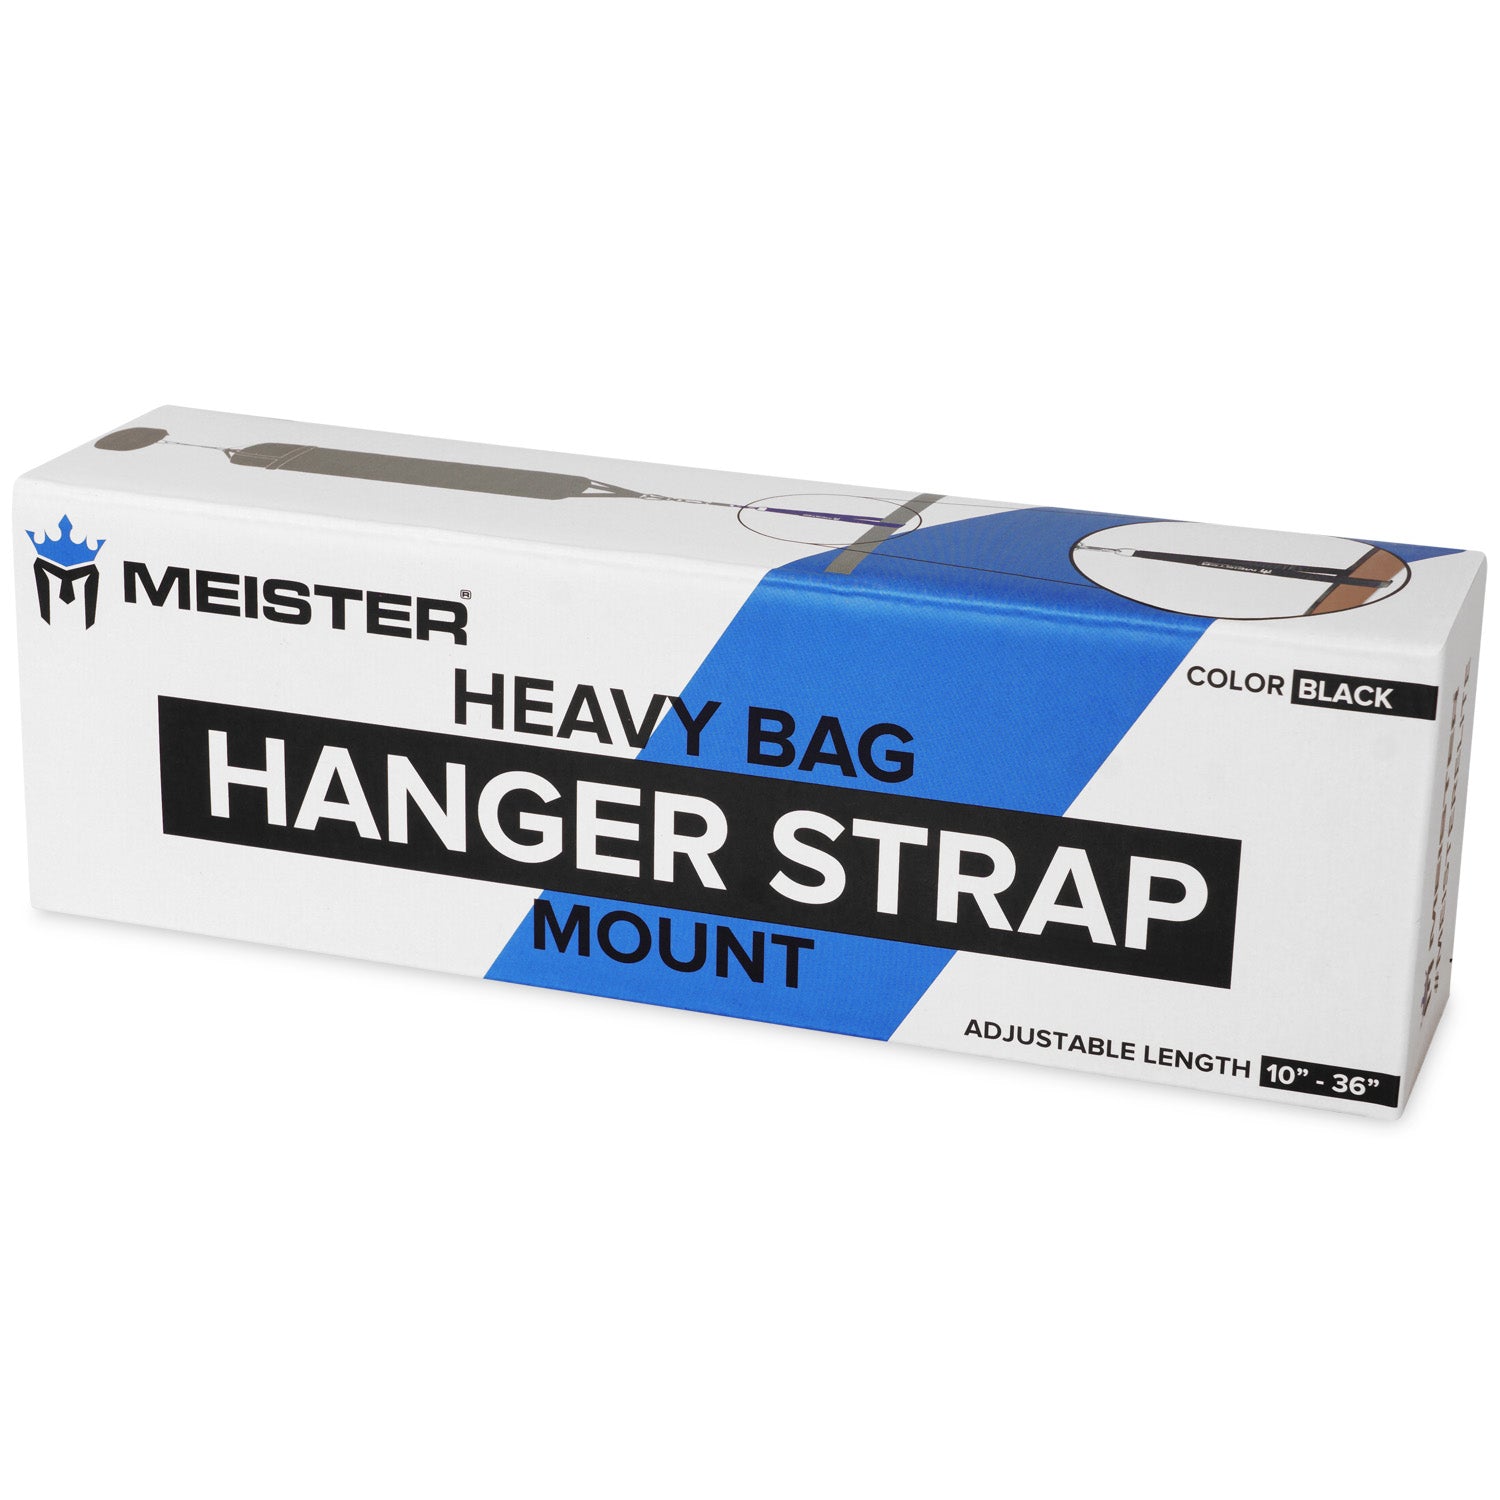 Meister Heavy Bag Hanger Strap Mount for Boxing & MMA Punching Bags - Black